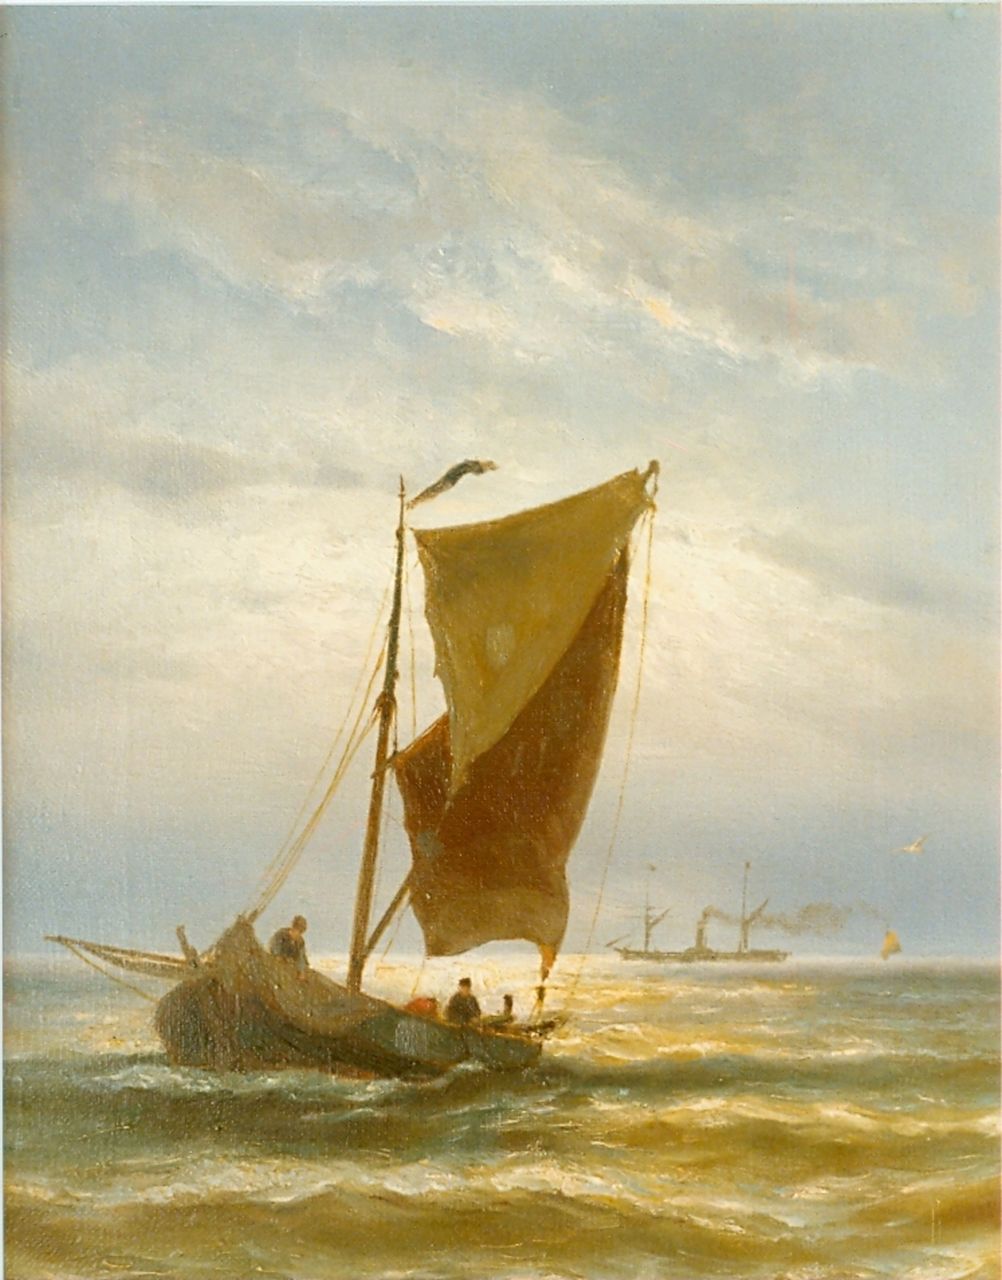 Koekkoek J.H.B.  | Johannes Hermanus Barend 'Jan H.B.' Koekkoek, Uitvarende vissersboot uit Vlissingen, olieverf op doek 40,4 x 31,3 cm, gesigneerd linksonder